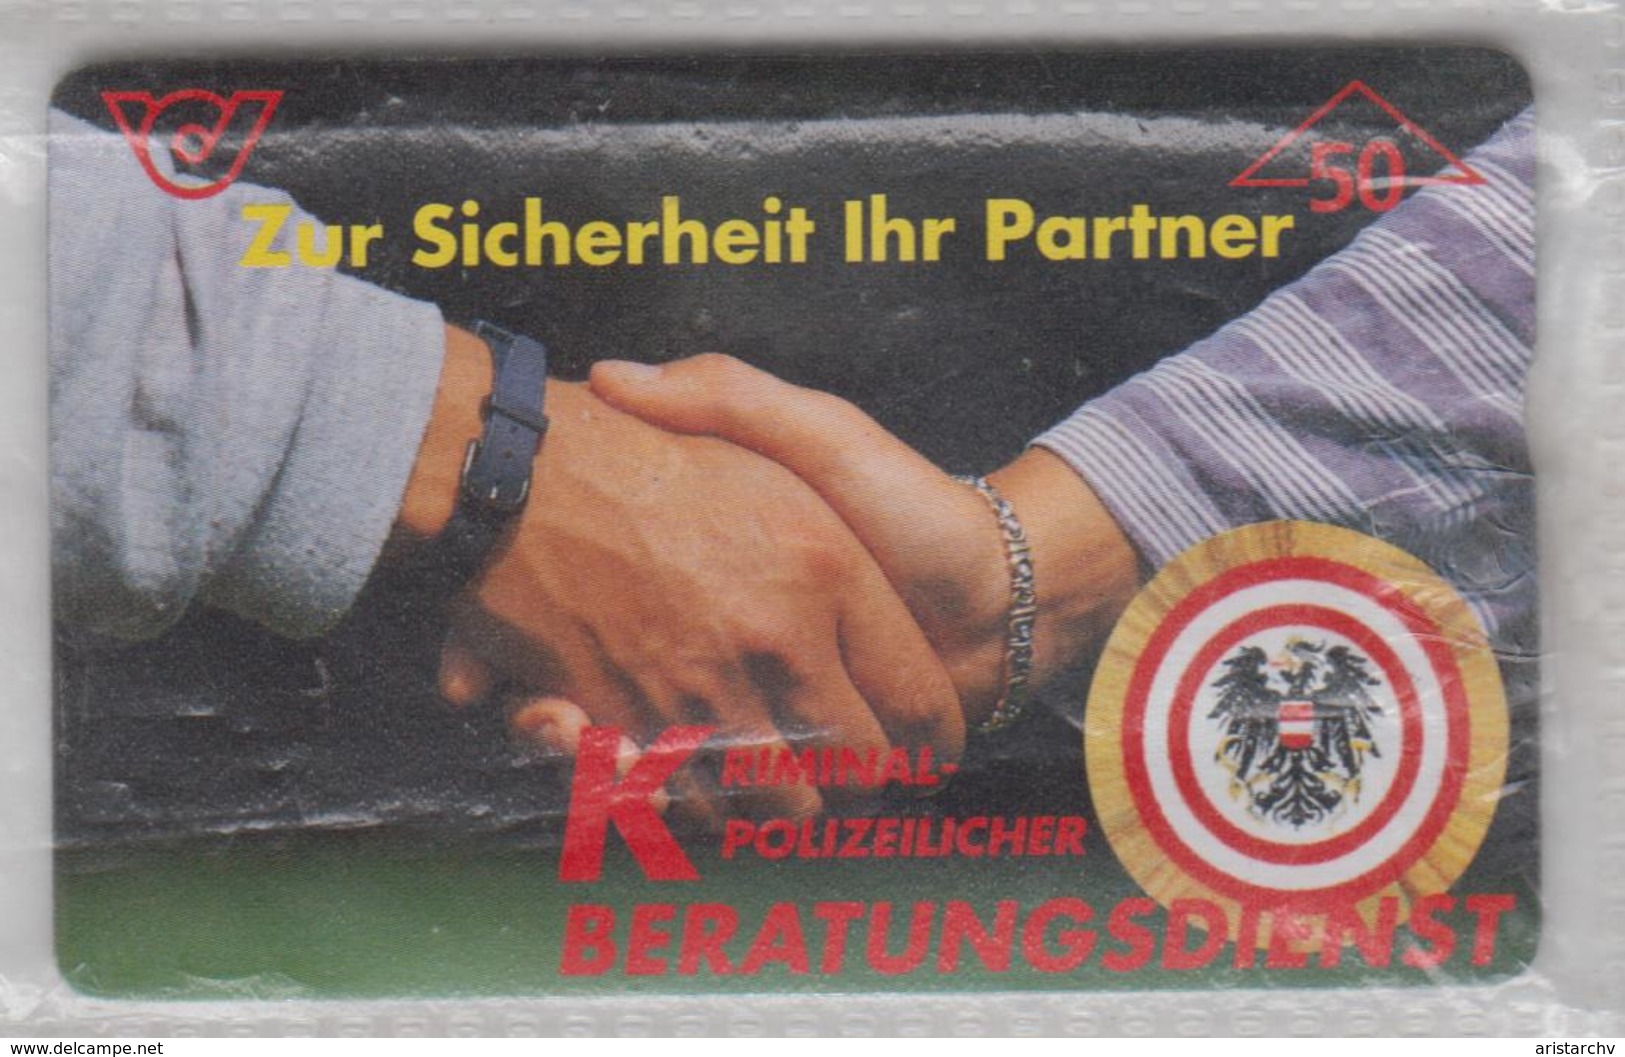 AUSTRIA 1996 KRIMINALPOLIZEILICHER BERATUNGSDIENST CRIMINAL POLICE USED PHONE CARD - Politie